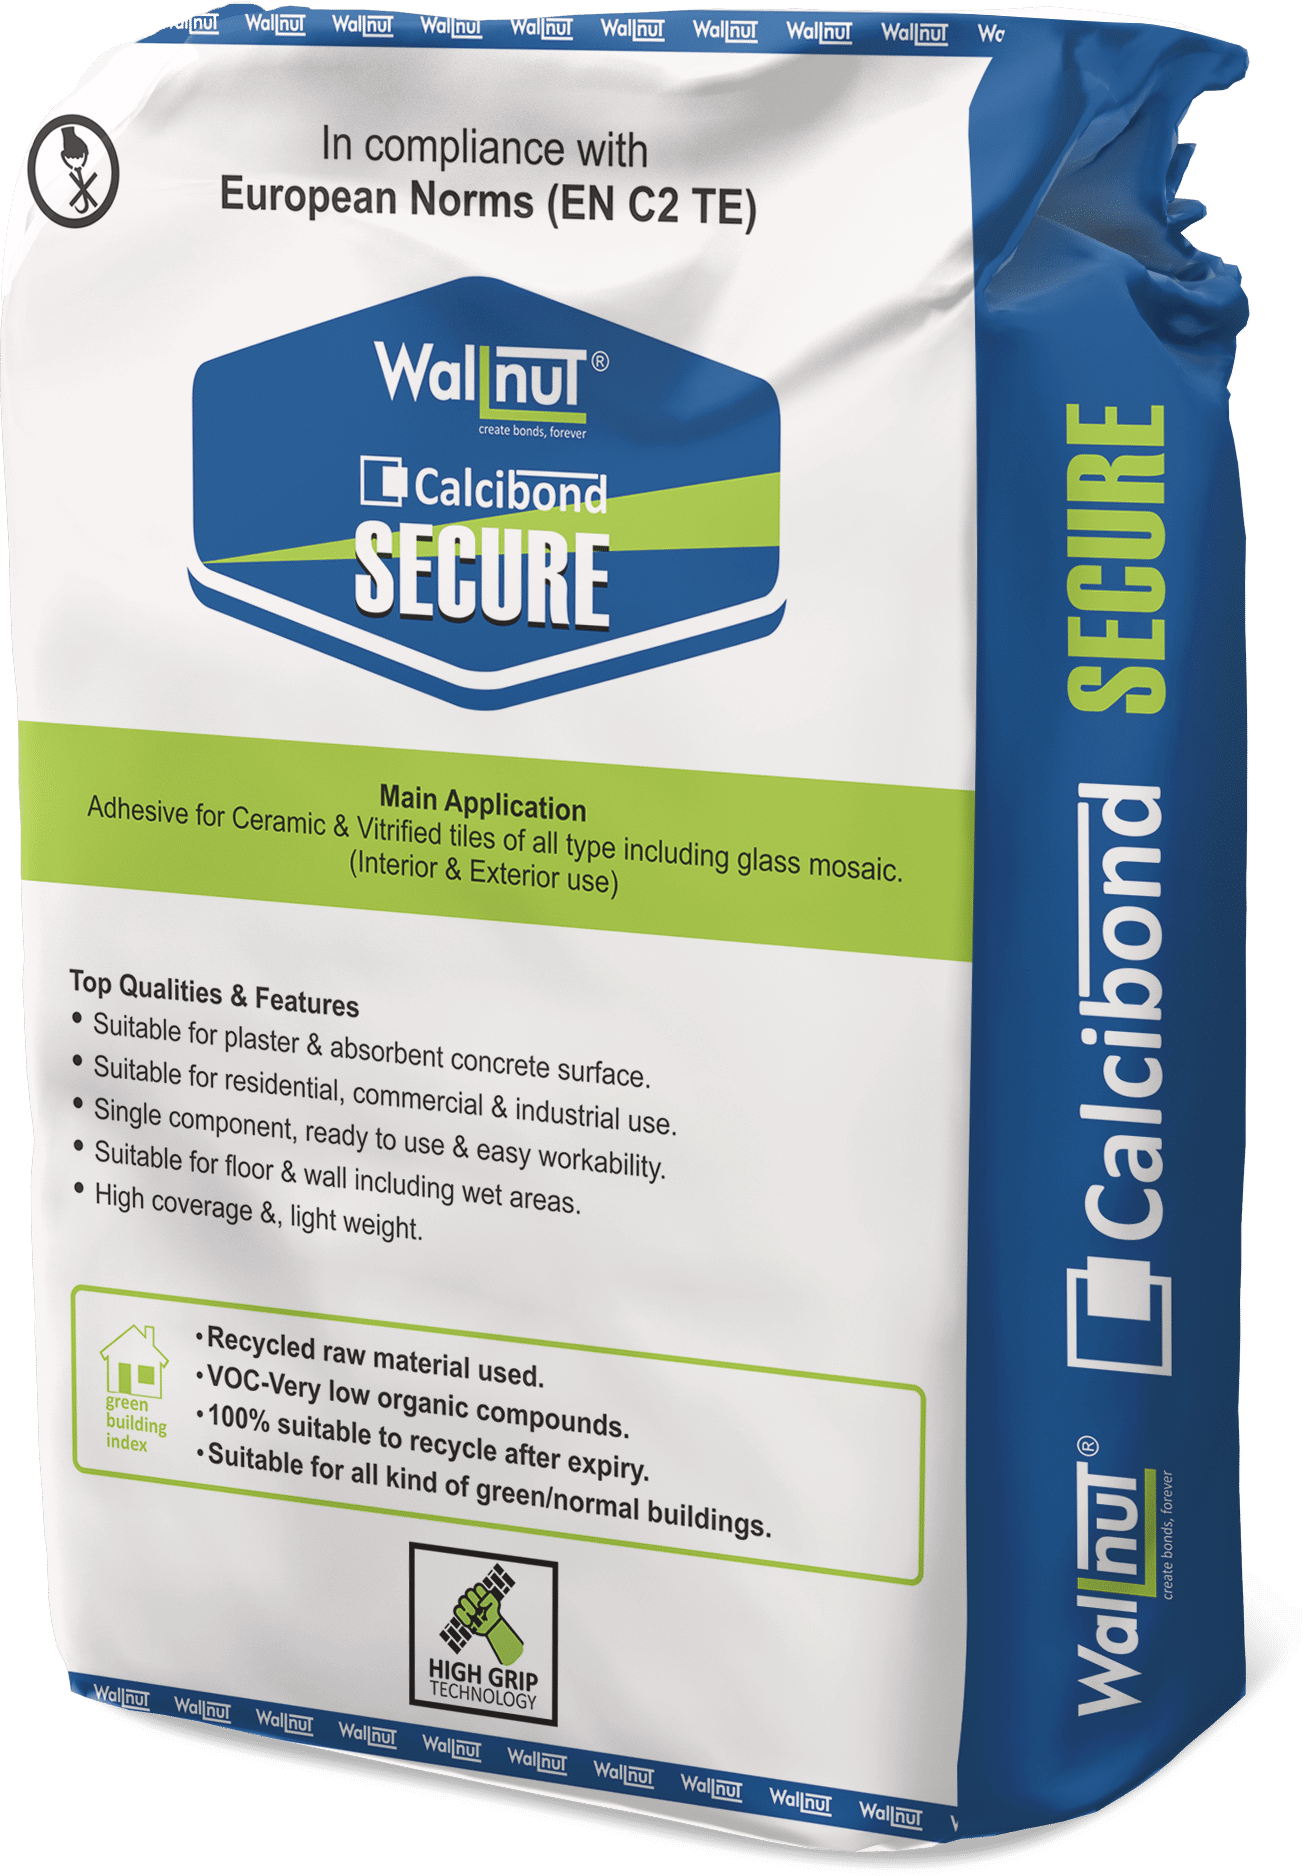 Wallnut Calcibond Secure